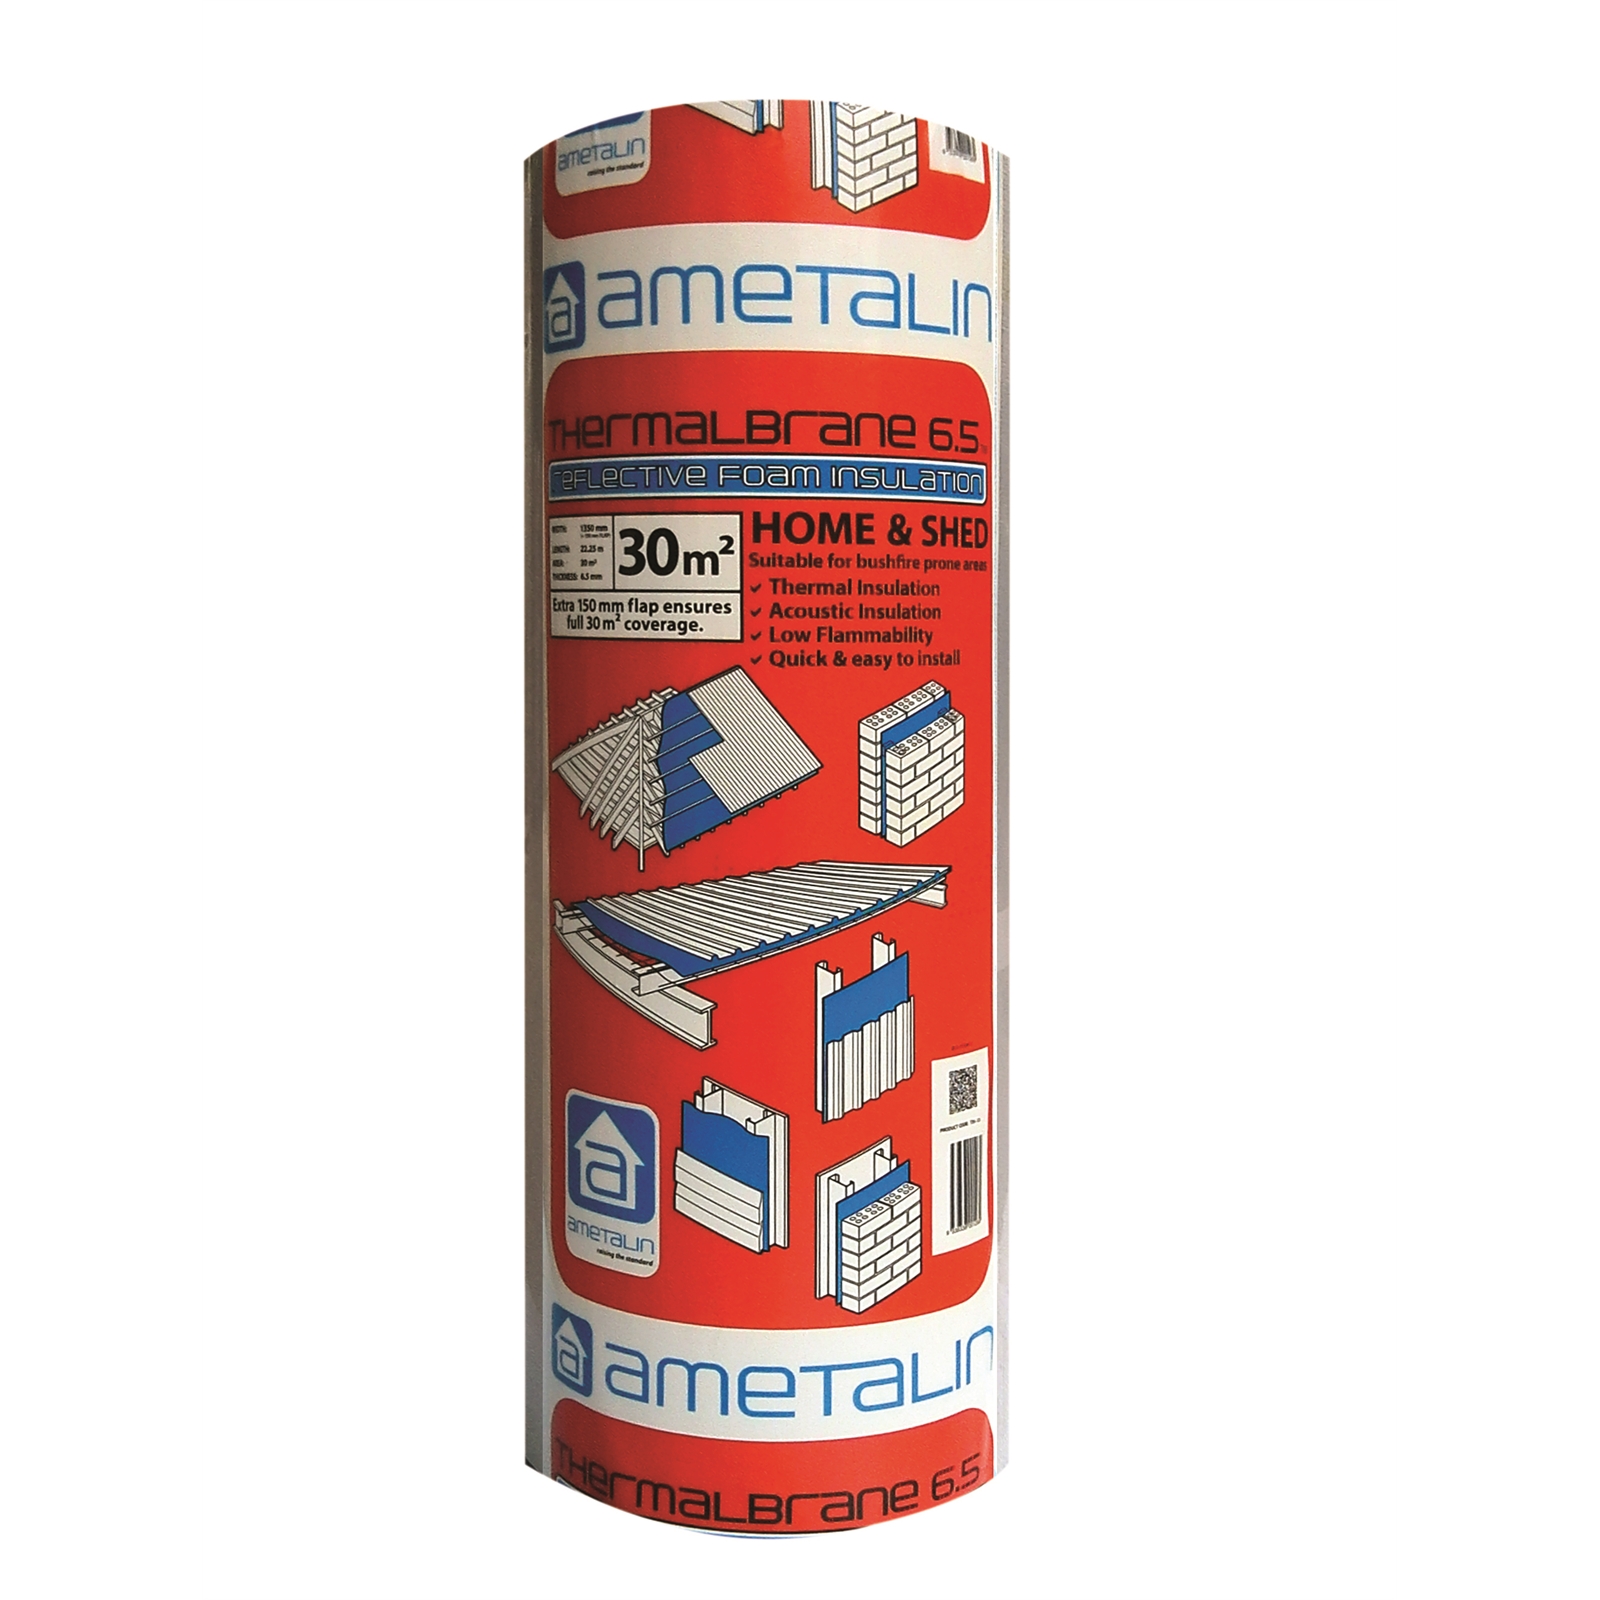 Ametalin 6.5 x 1350mm x 22.25m ThermalBrane 6.5™ Insulation